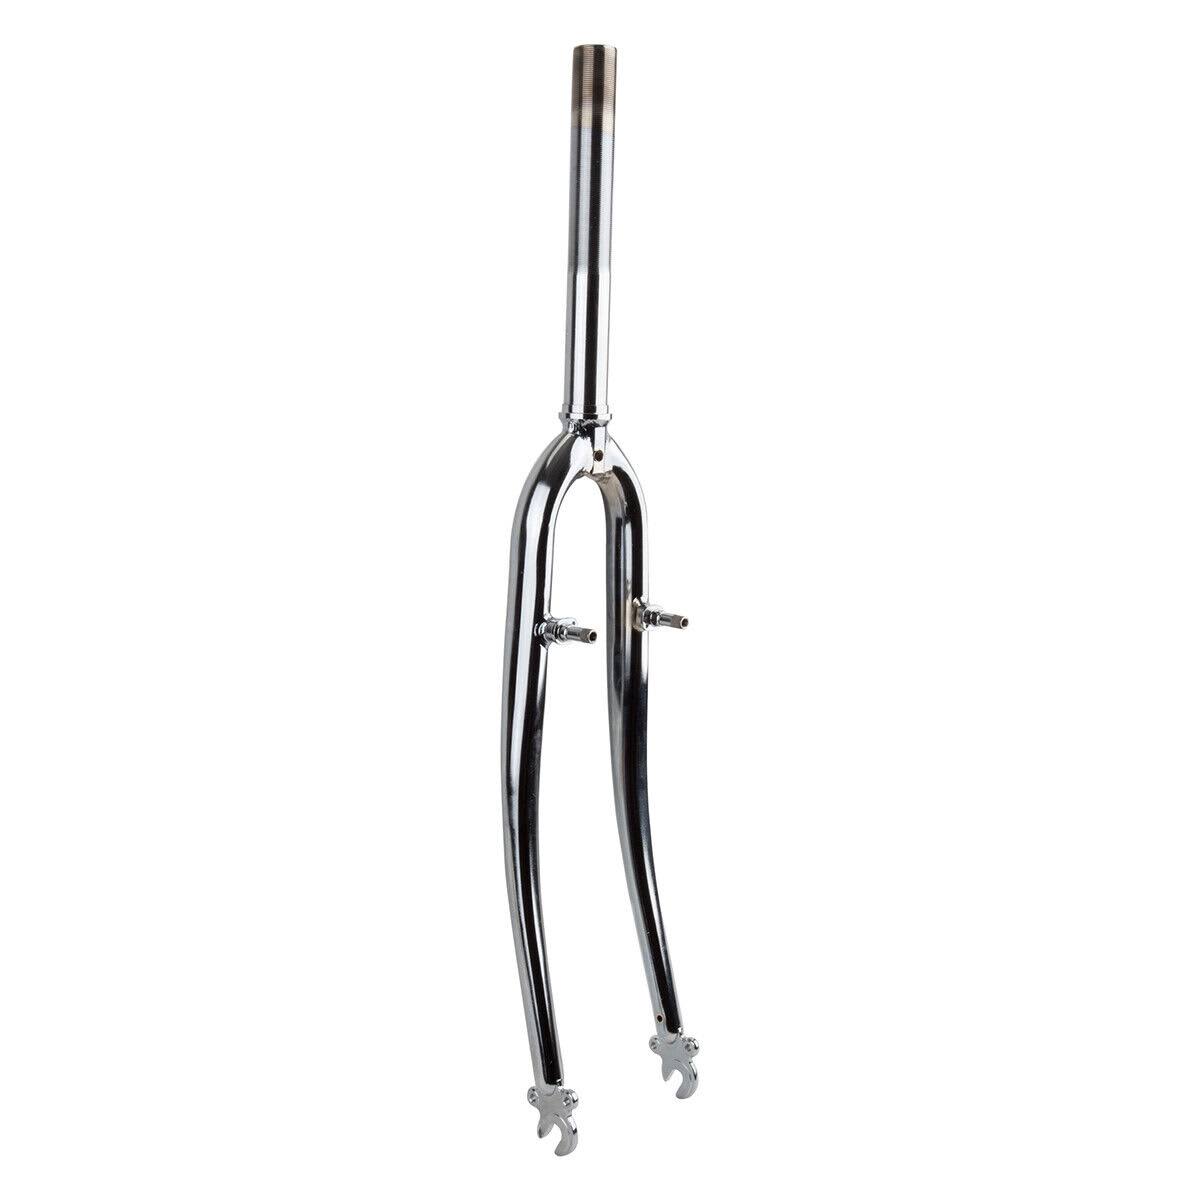 Sunlite Hybrid Bicycle Threaded Fork - Silver, 1", 700C